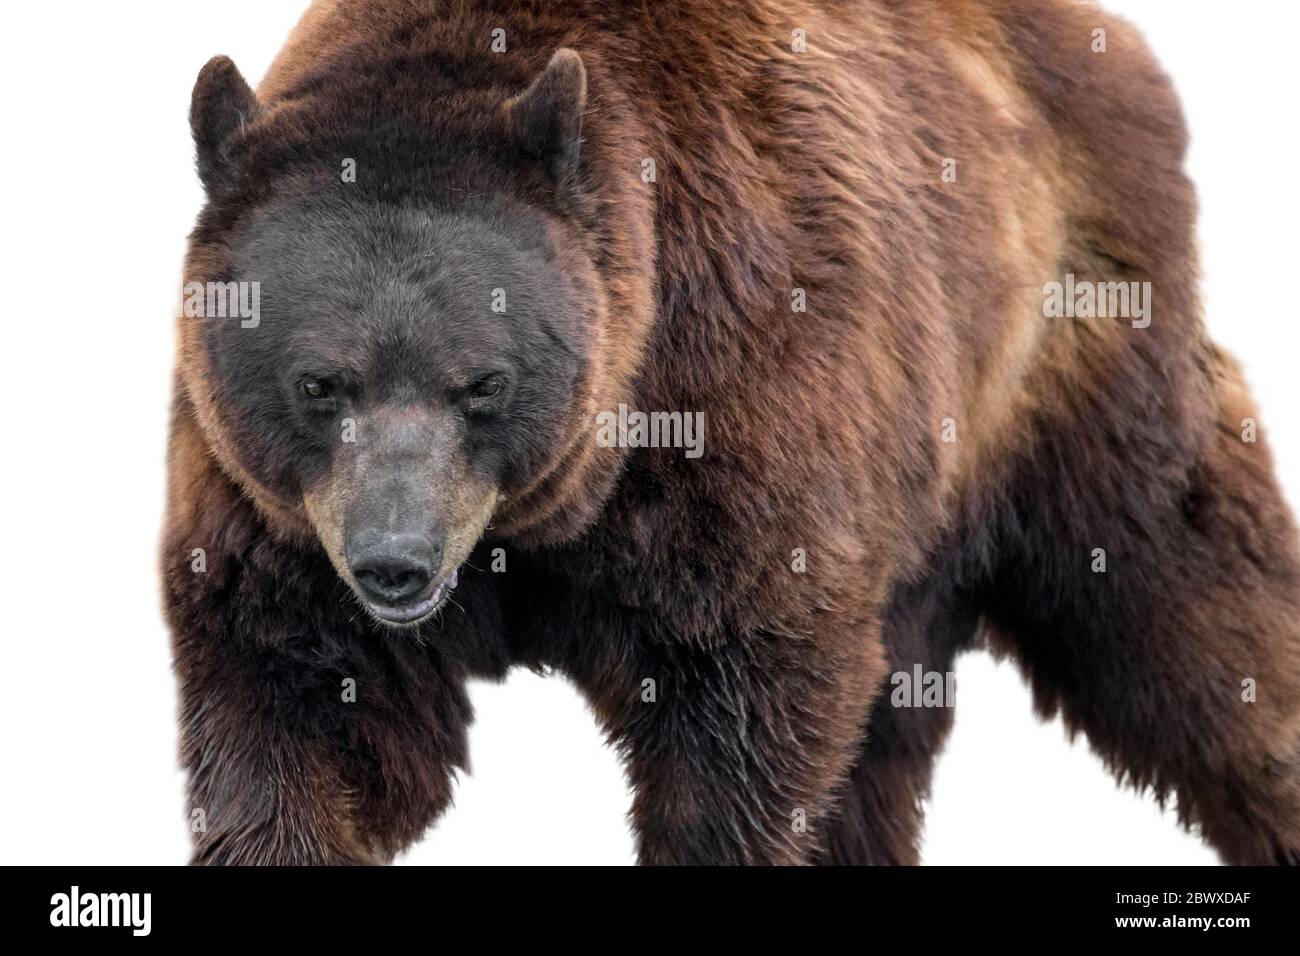 European brown bear (Ursus arctos arctos) close up portrait against white background Stock Photo